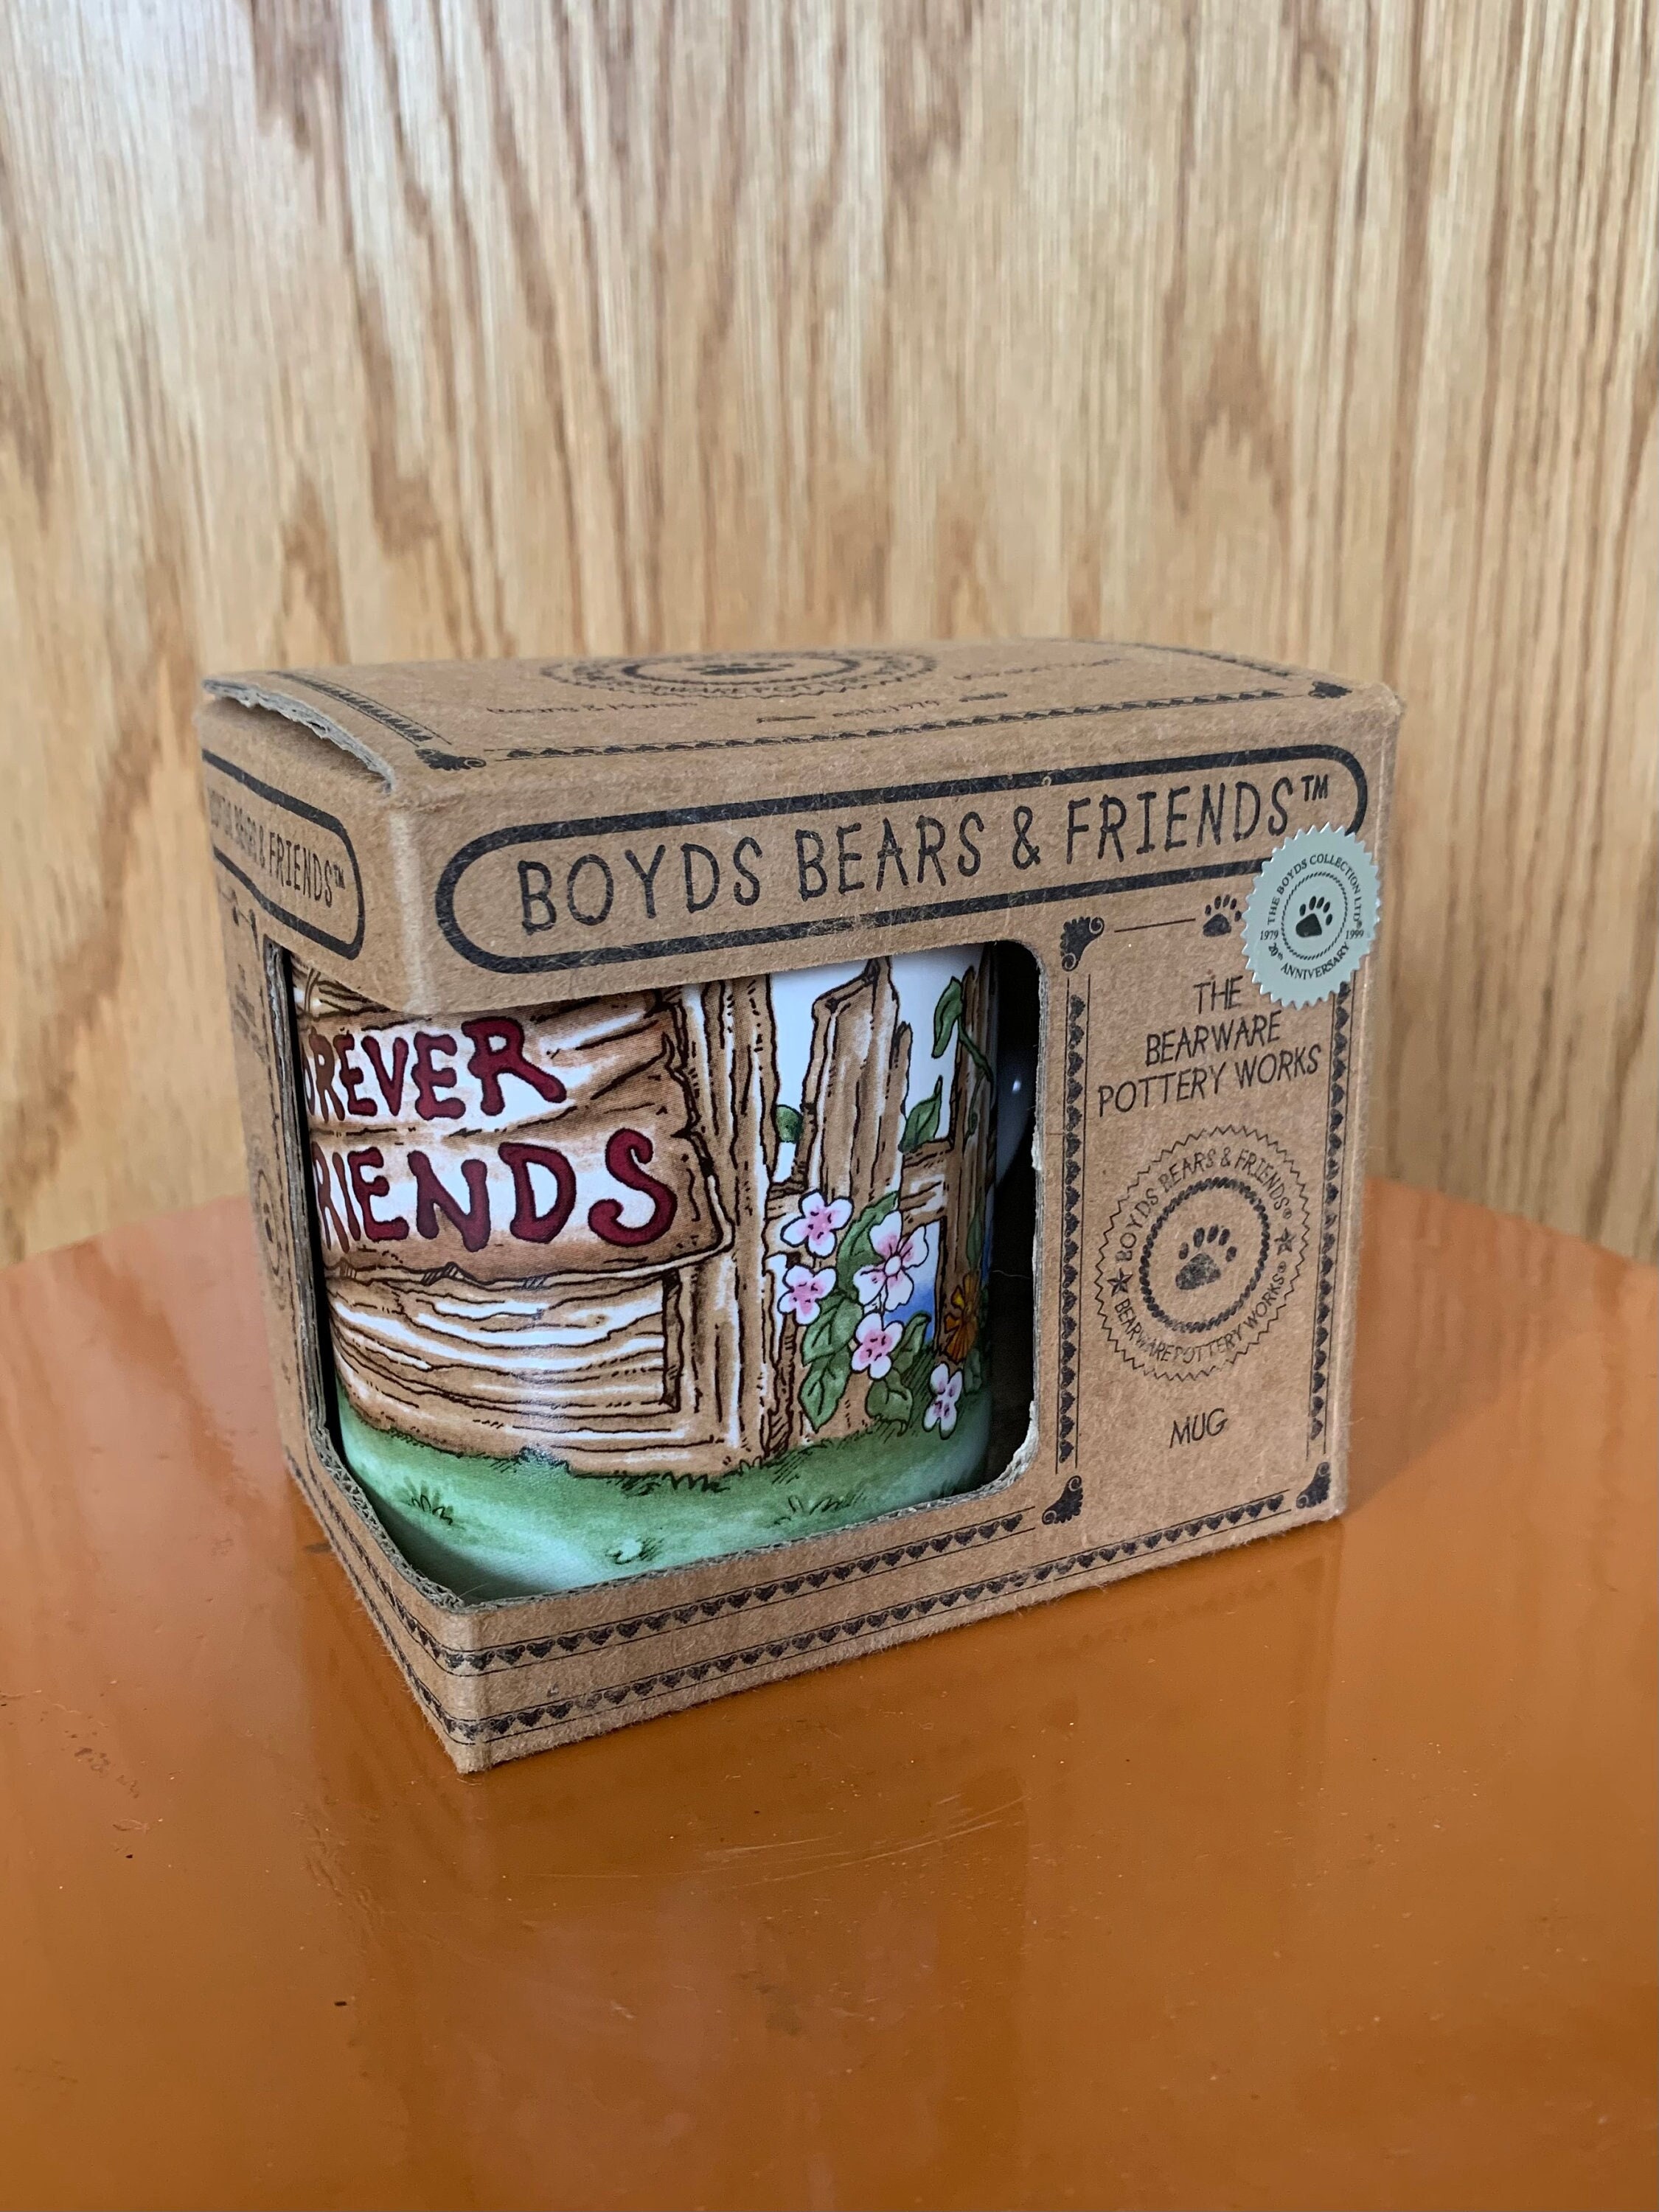 Brother Bear Camp Mug – Wild Peonies Studio